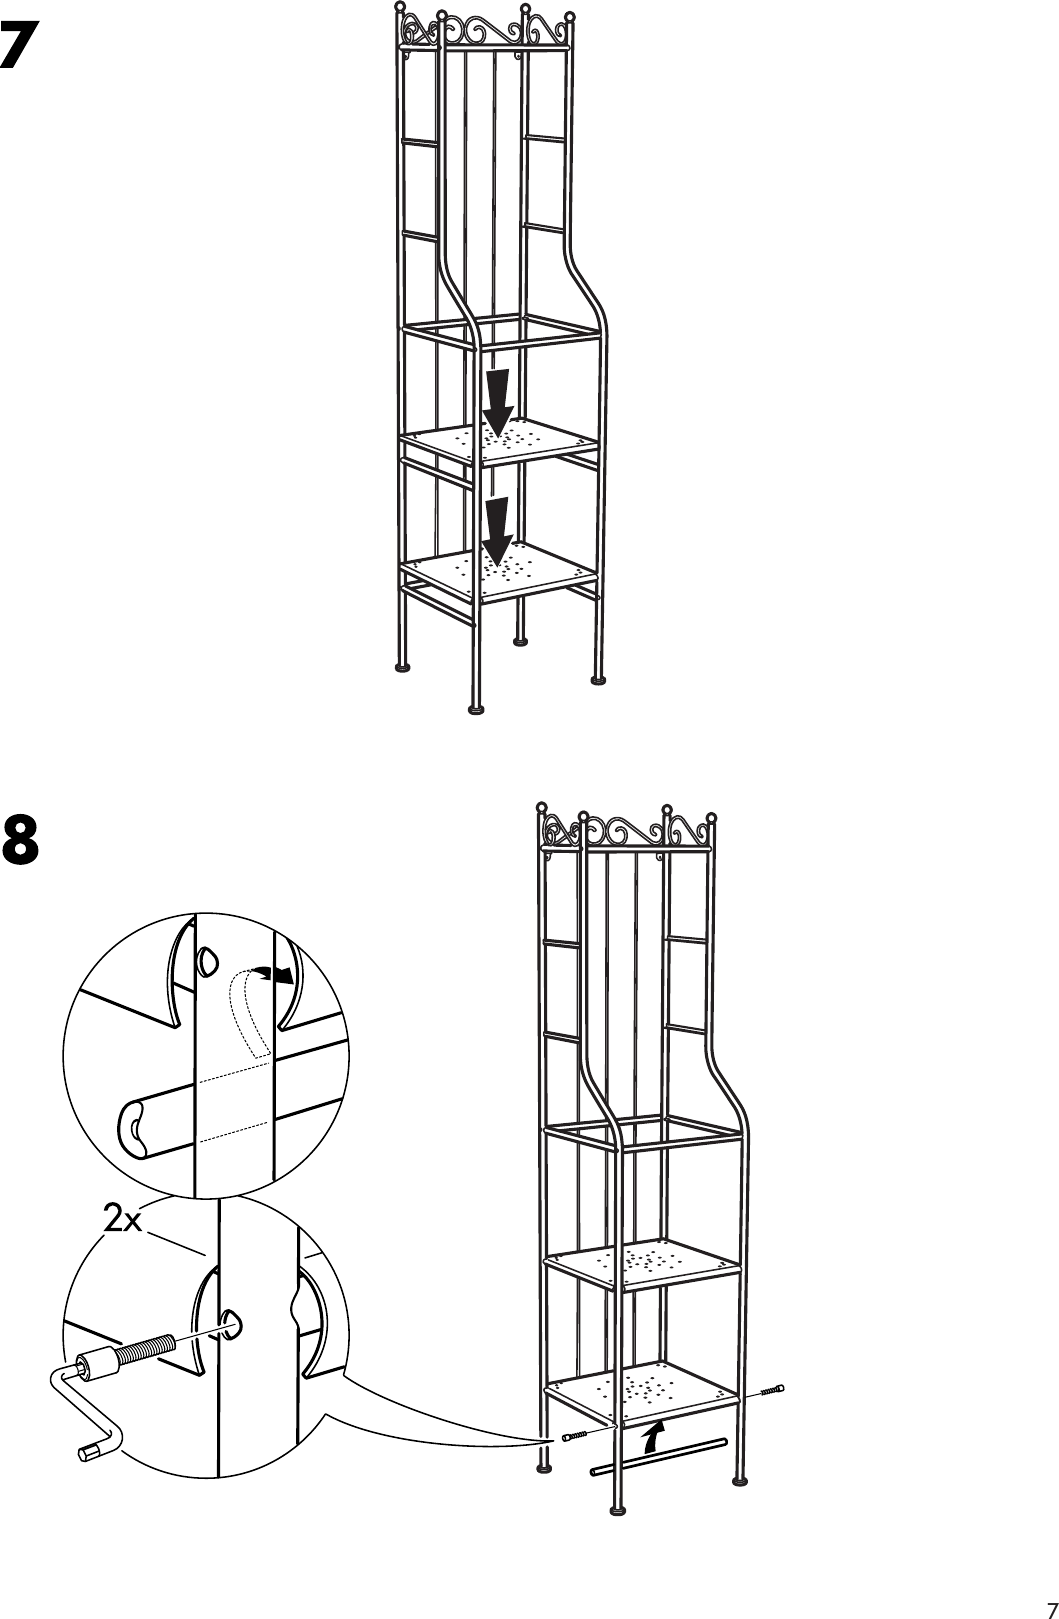 Page 7 of 8 - Ikea Ikea-Rannskar-Shelving-Unit-17X69-Assembly-Instruction